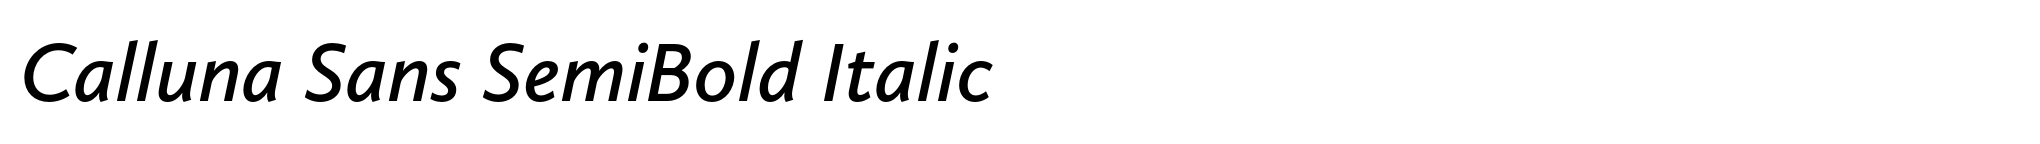 Calluna Sans SemiBold Italic image